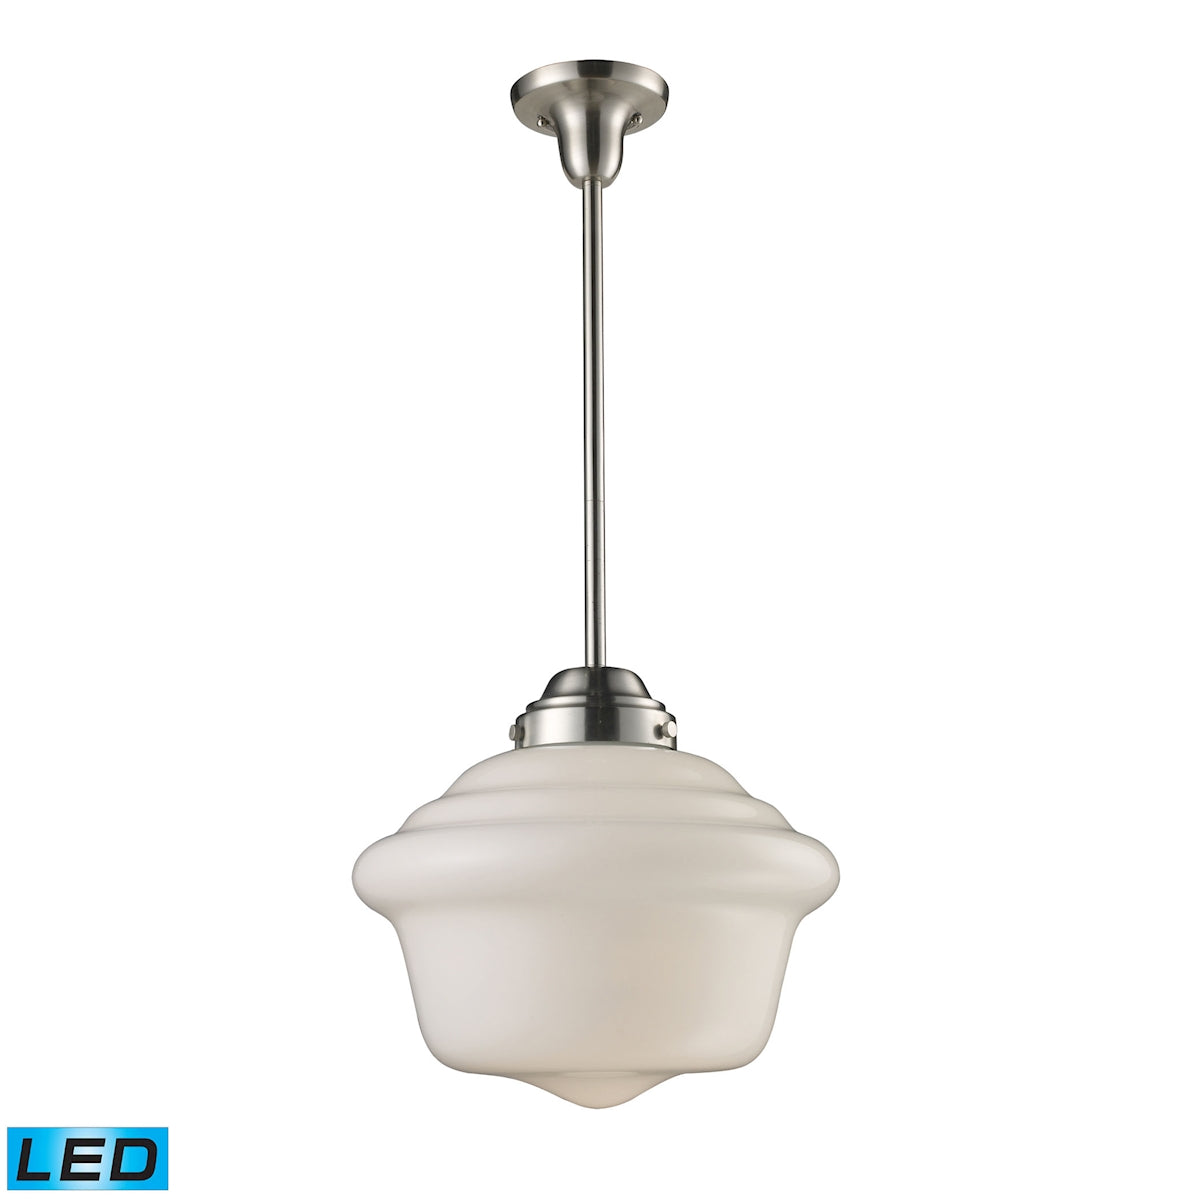 ELK Lighting 69040-1-LED Schoolhouse 1-Light Pendant in Satin Nickel with White Glass - Includes LED Bulb